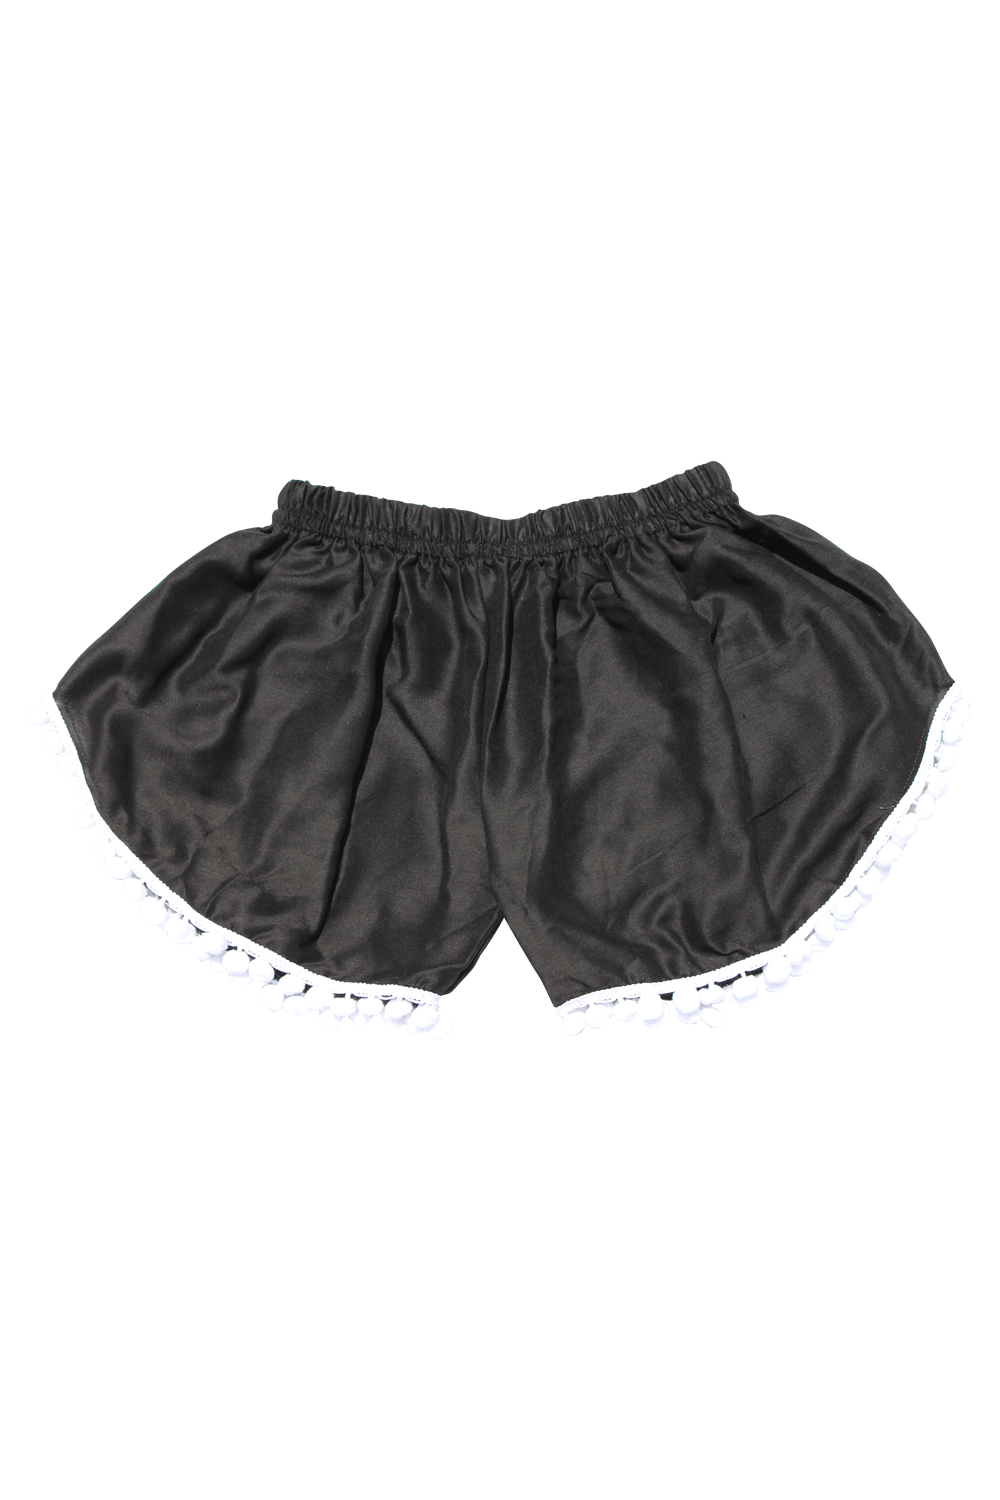 Black pompom shorts. Boho shorts from Bohemian Island